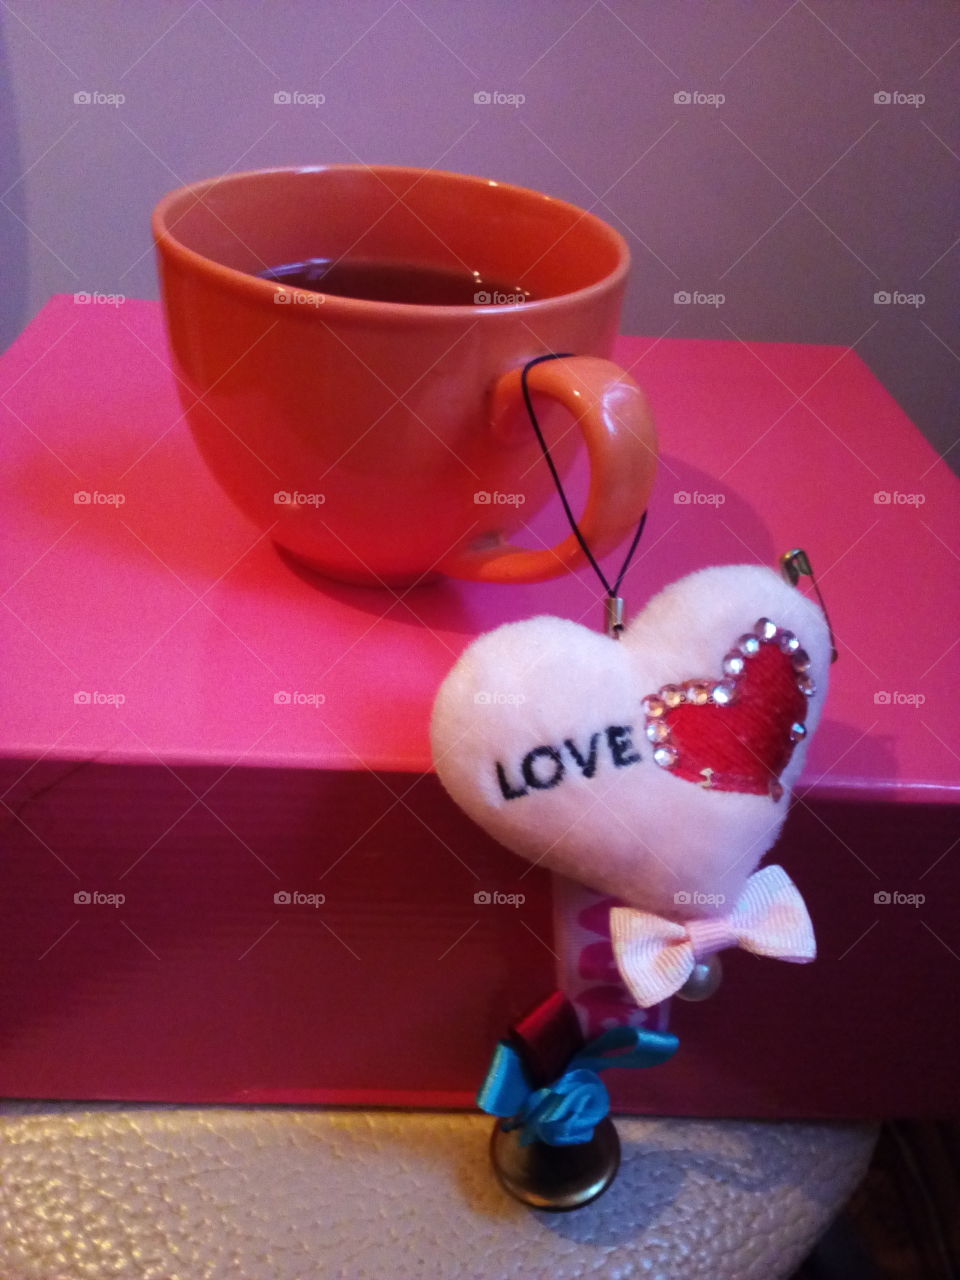 drink, tea, love, heart, pink, breakfast, чай, напиток, напитки, сердце, мило, завтрак, любовь, amor, amore, bebidas, rose.